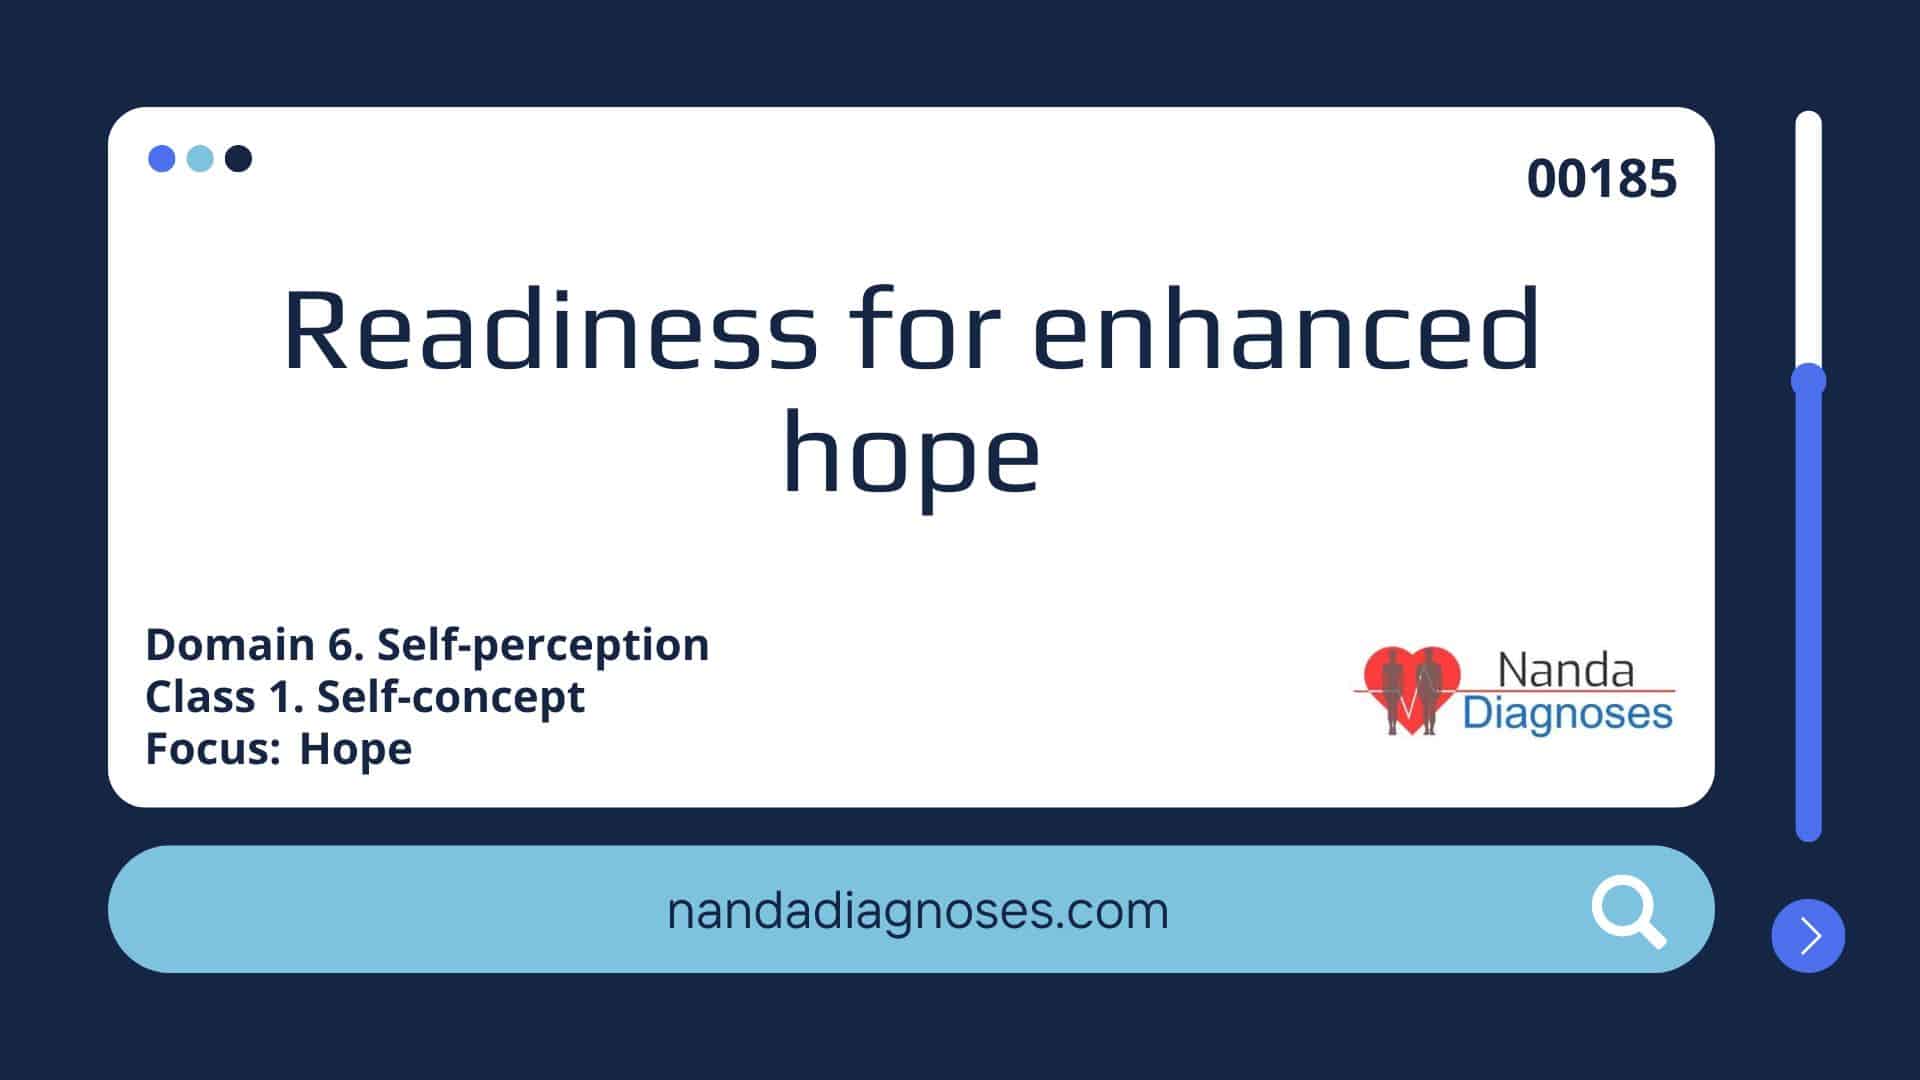 Nursing diagnosis Readiness for enhanced hope